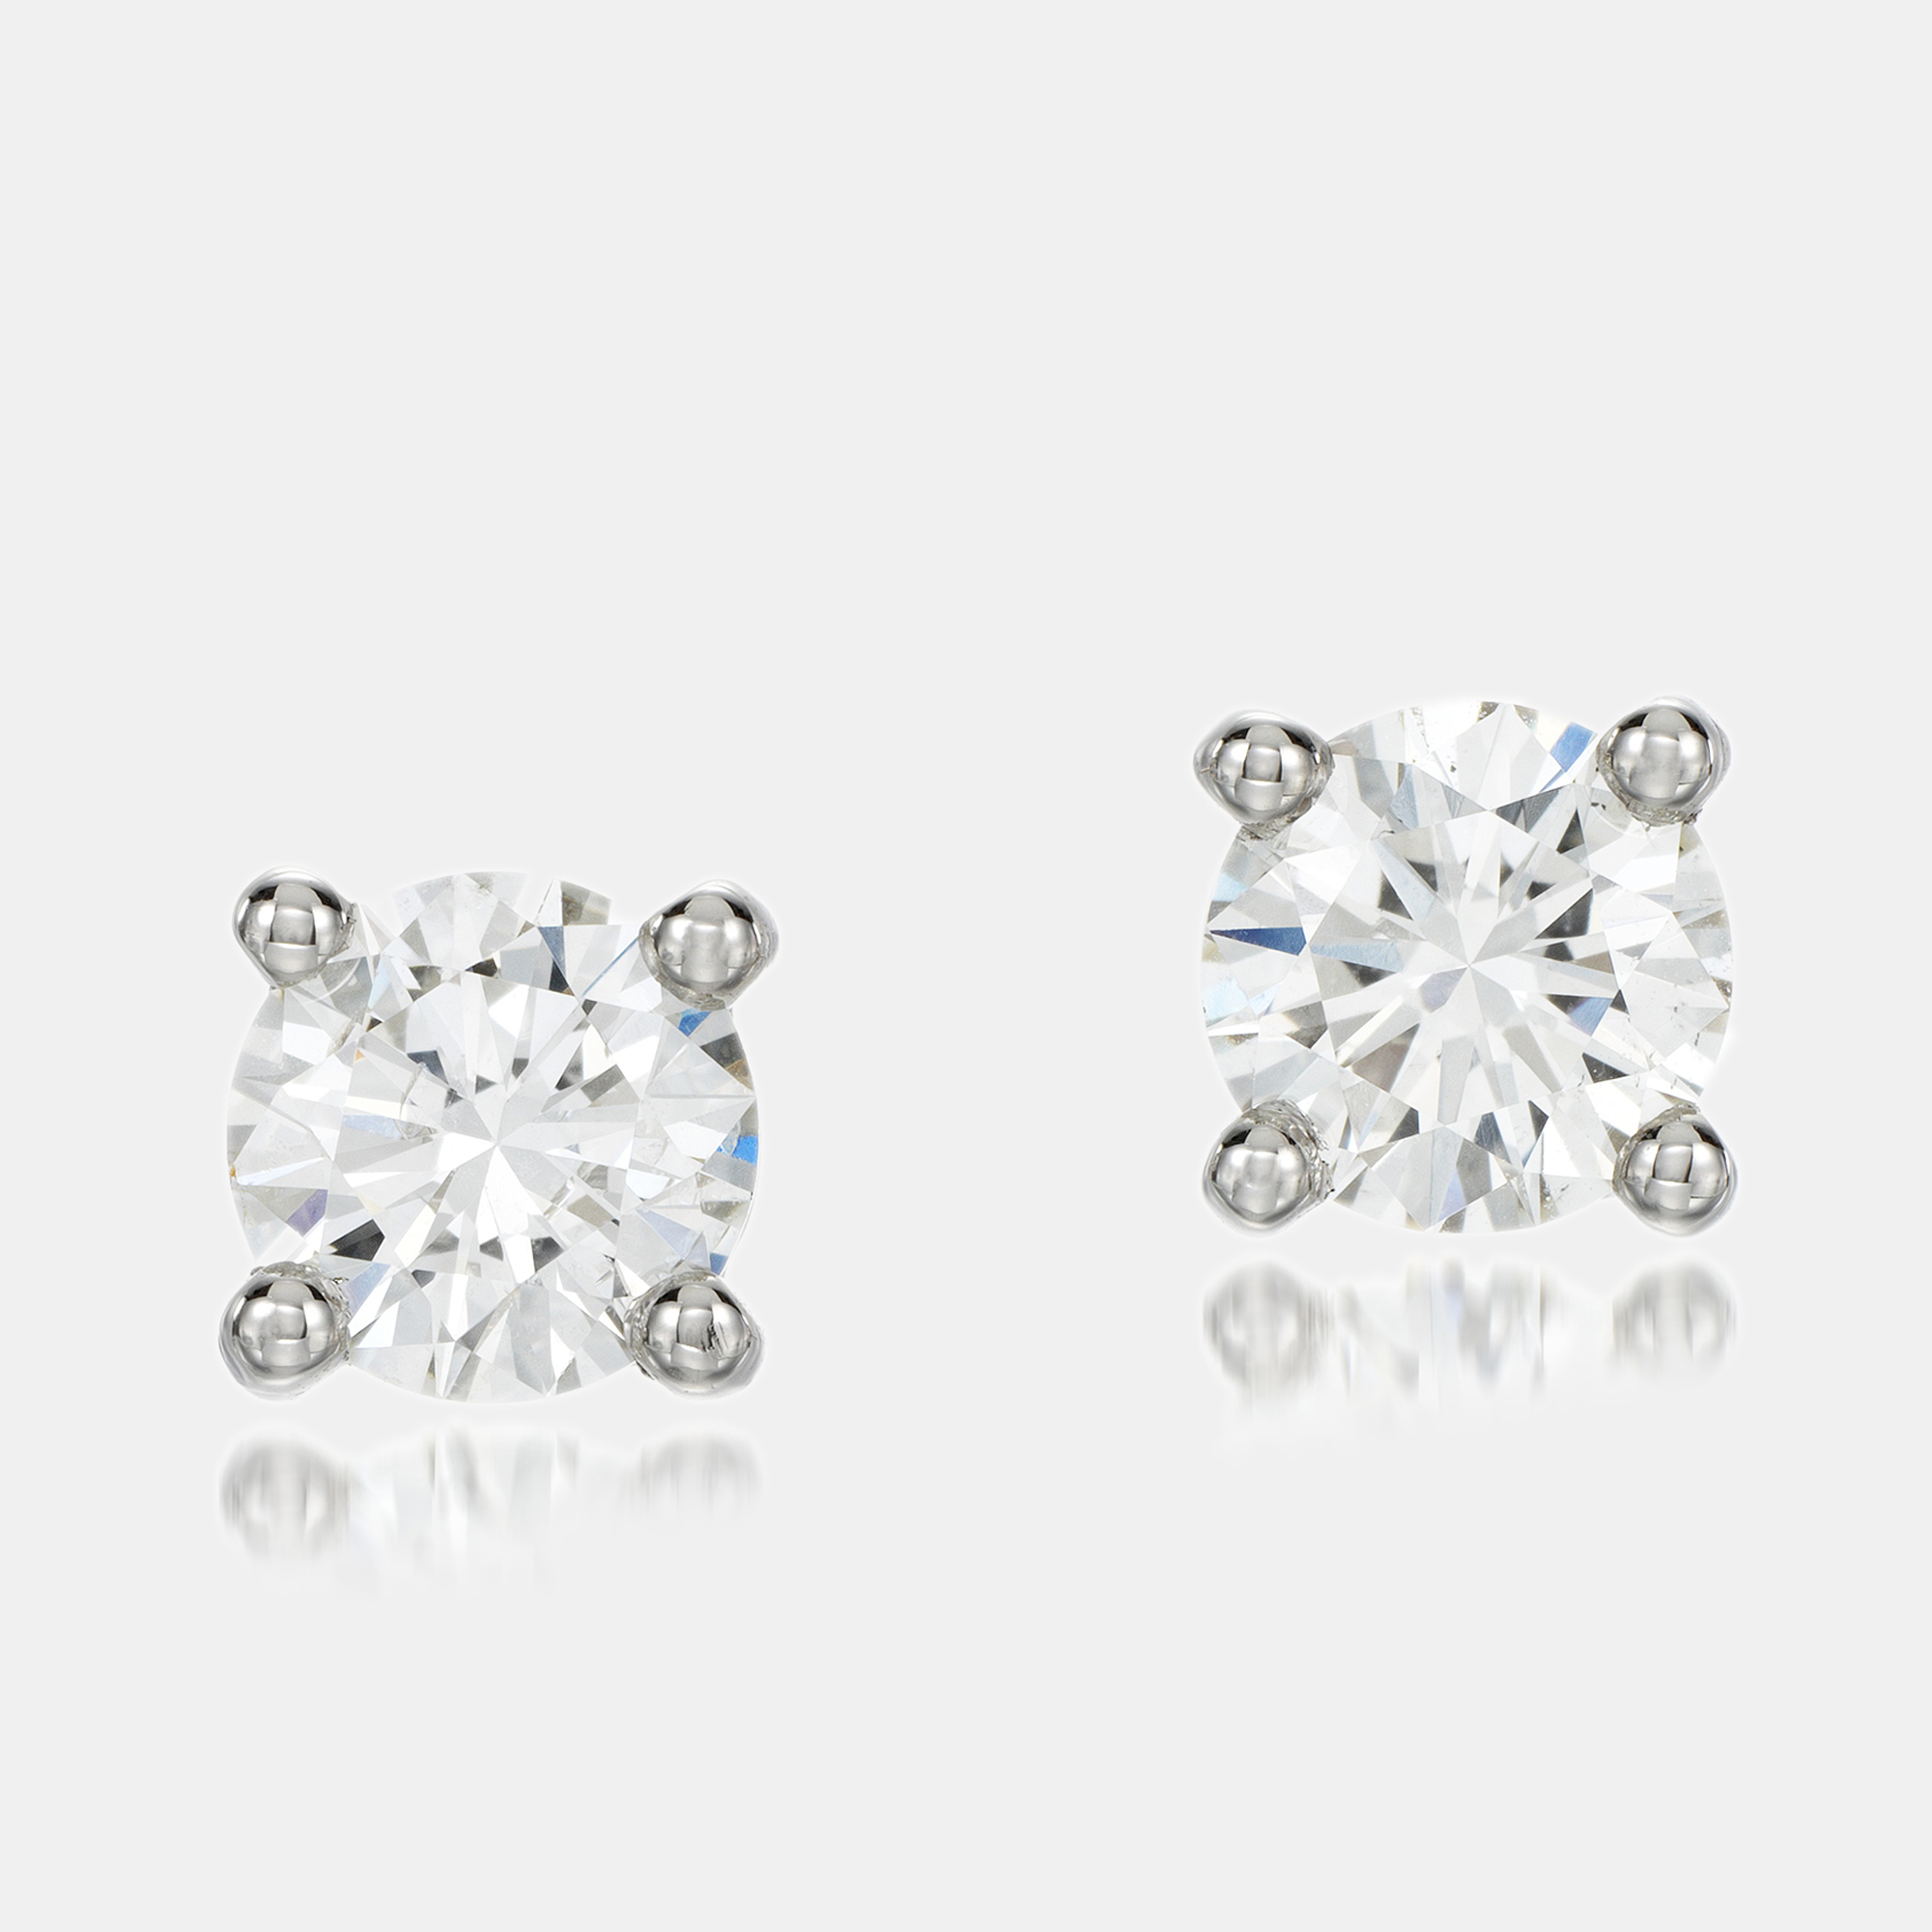 The diamond edit 18k white gold diamonds 0.66 ct. stud earrings